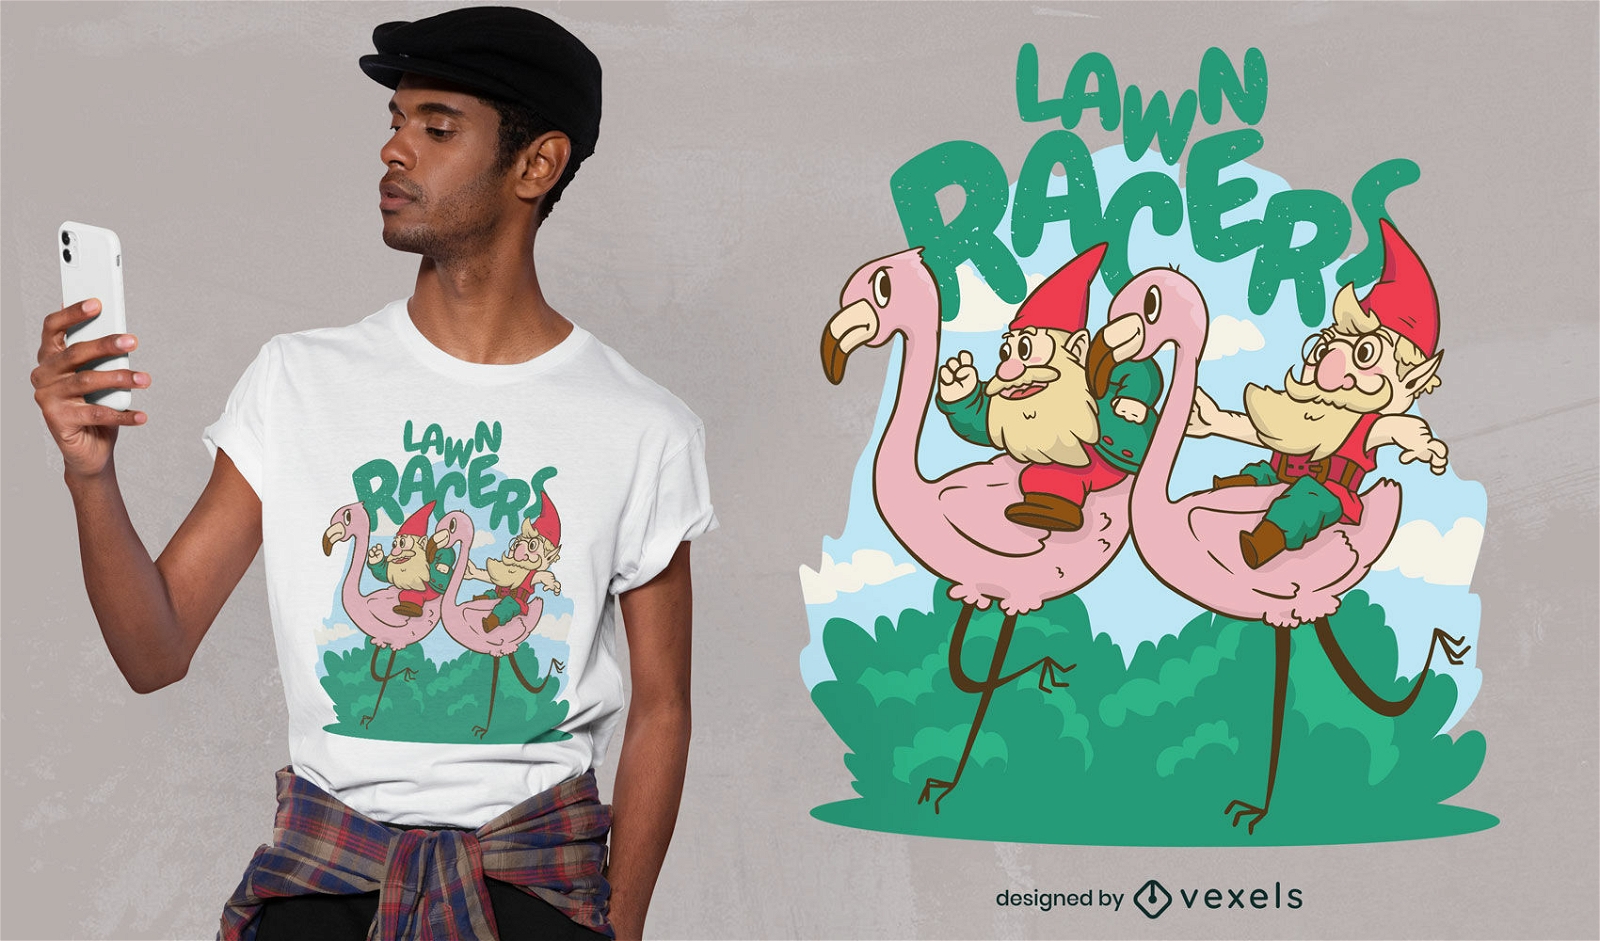 Cool lawn gnomes t-shirt design